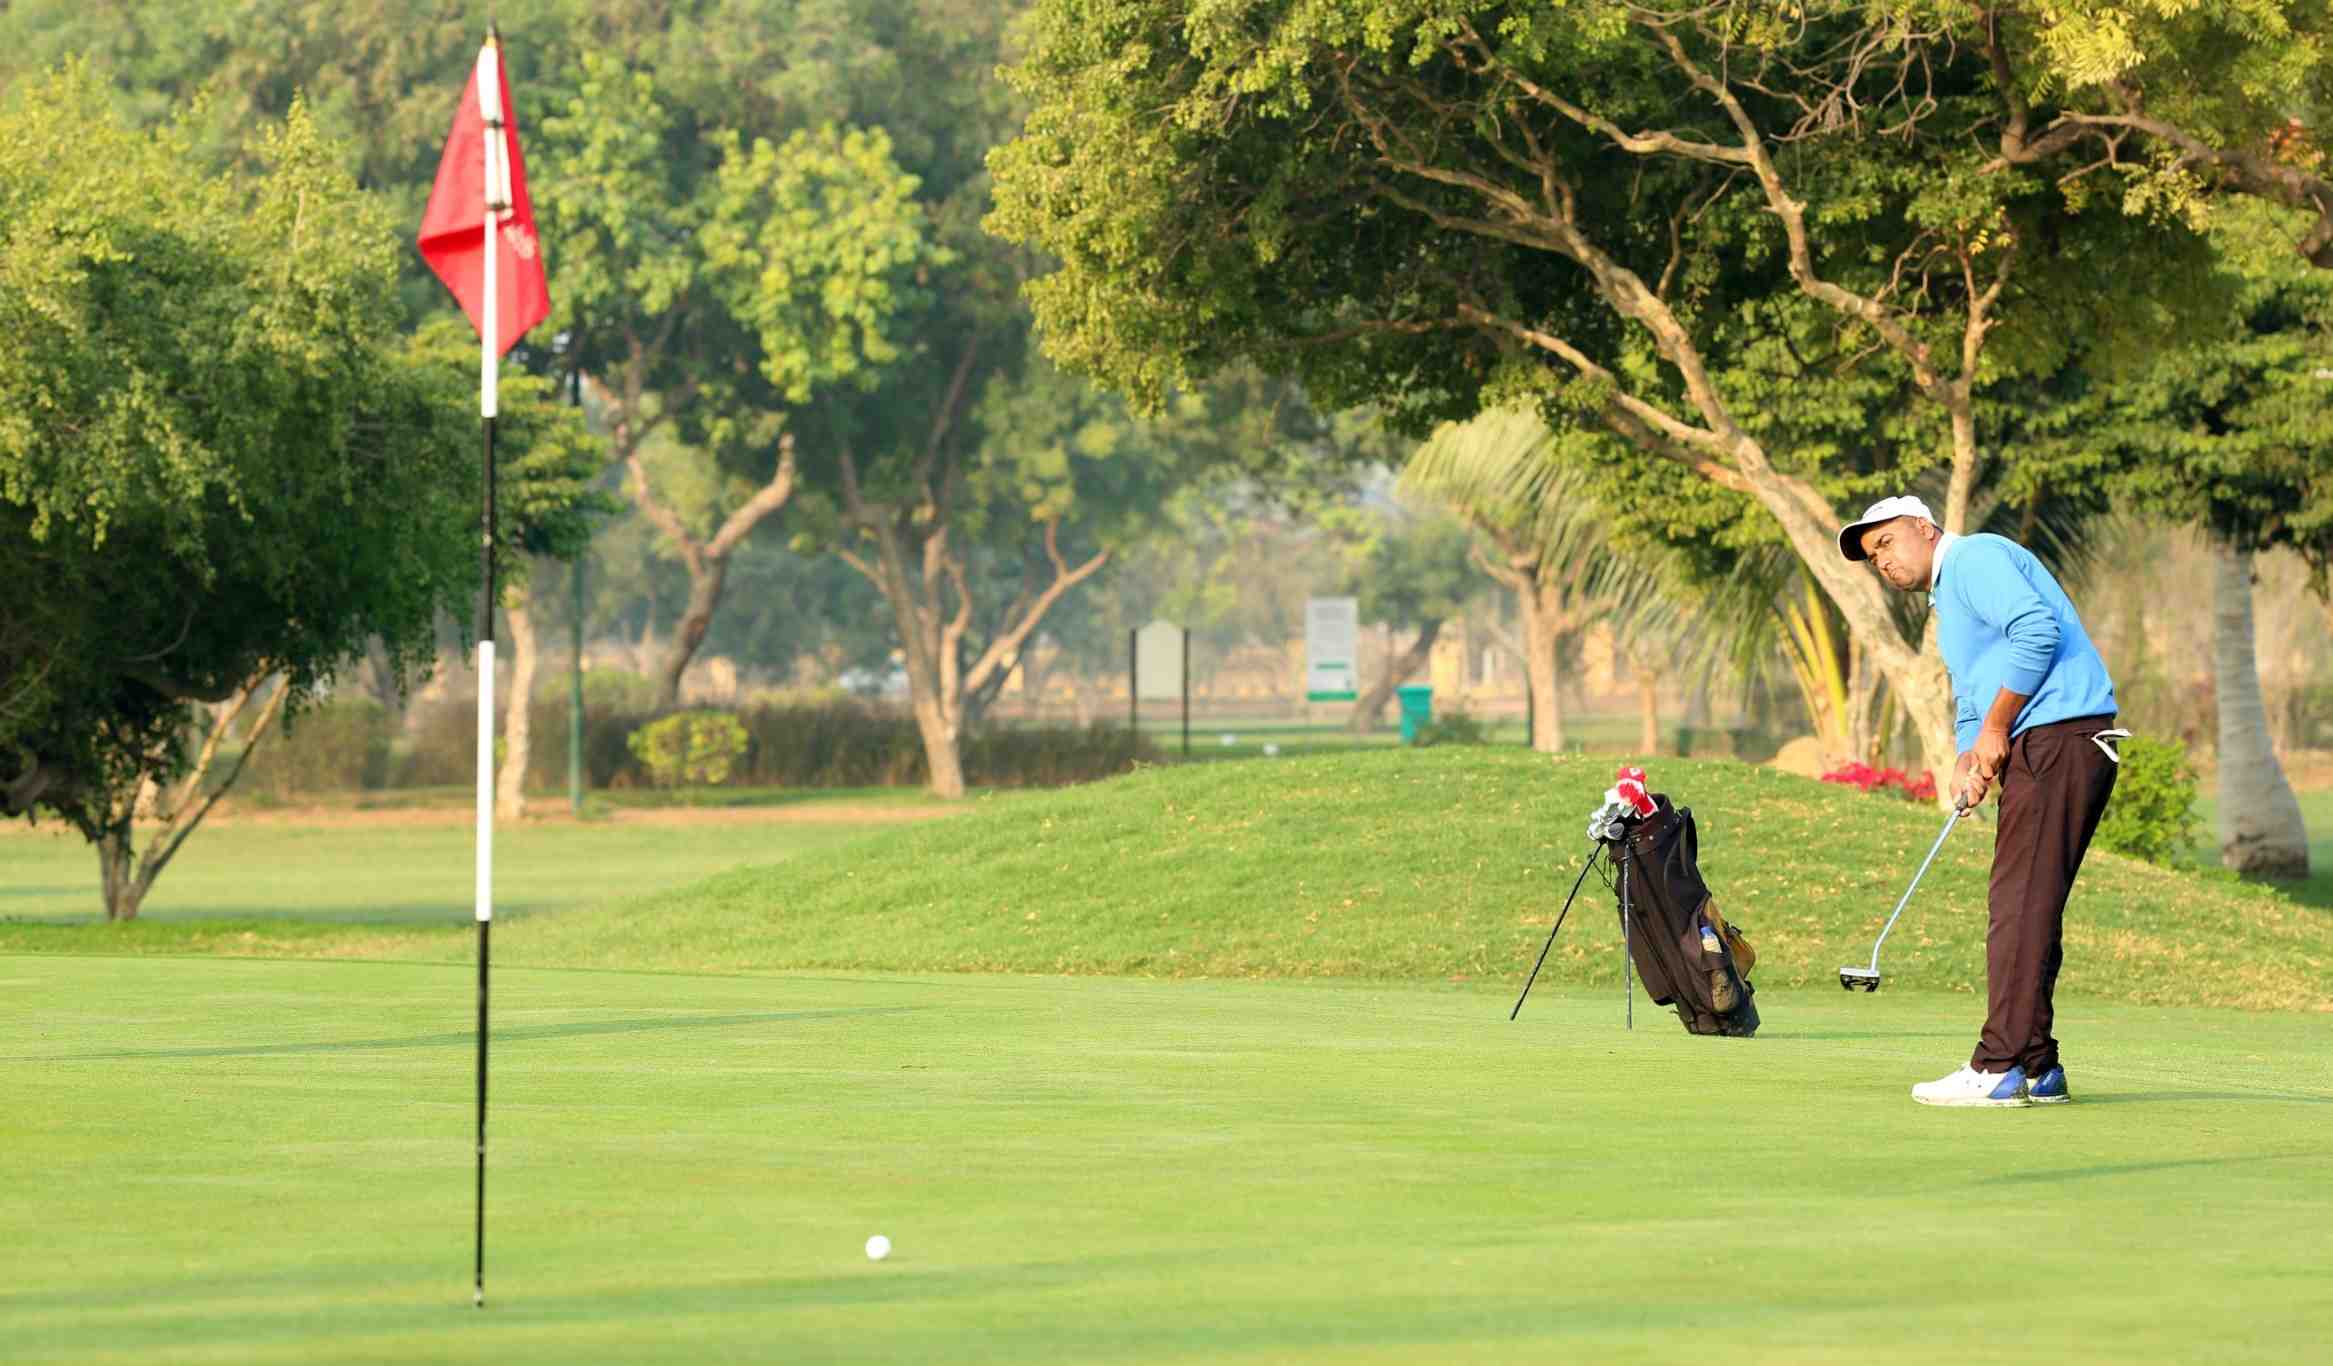 Rashid D. Habib Memorial Golf: Ahmed Baig earns 2-stroke lead